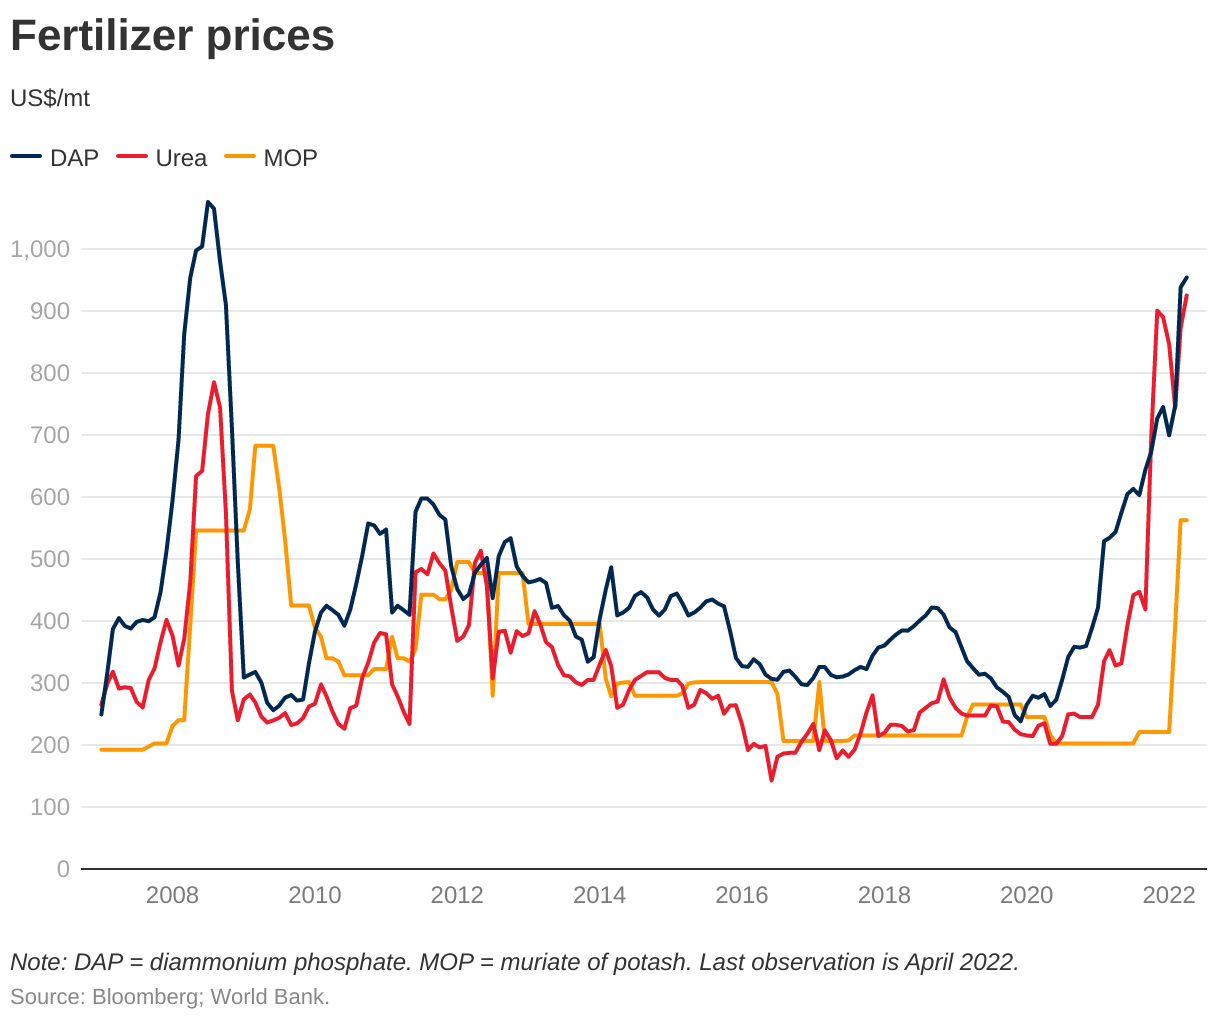 Nitrogen fertilizer prices at multiyear highs